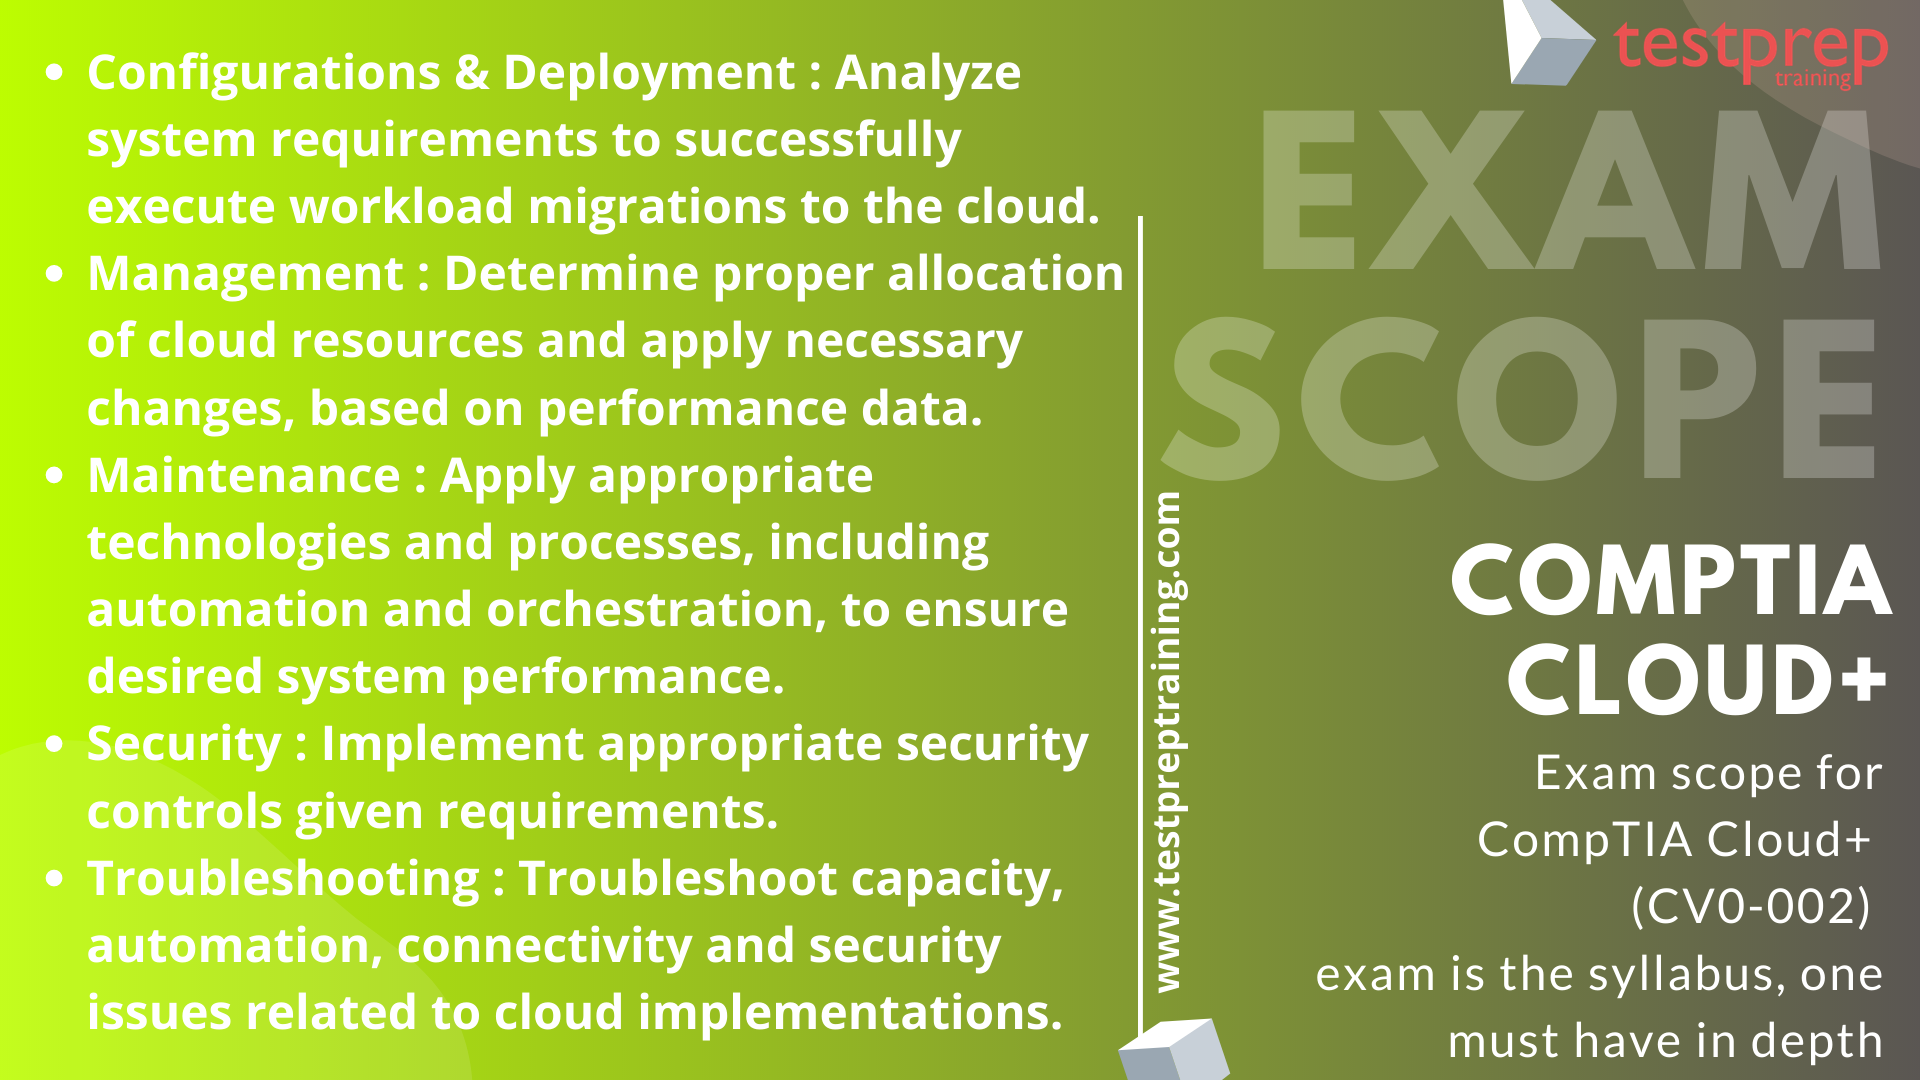 CompTIA Cloud+ (CV0-002) Exam scope